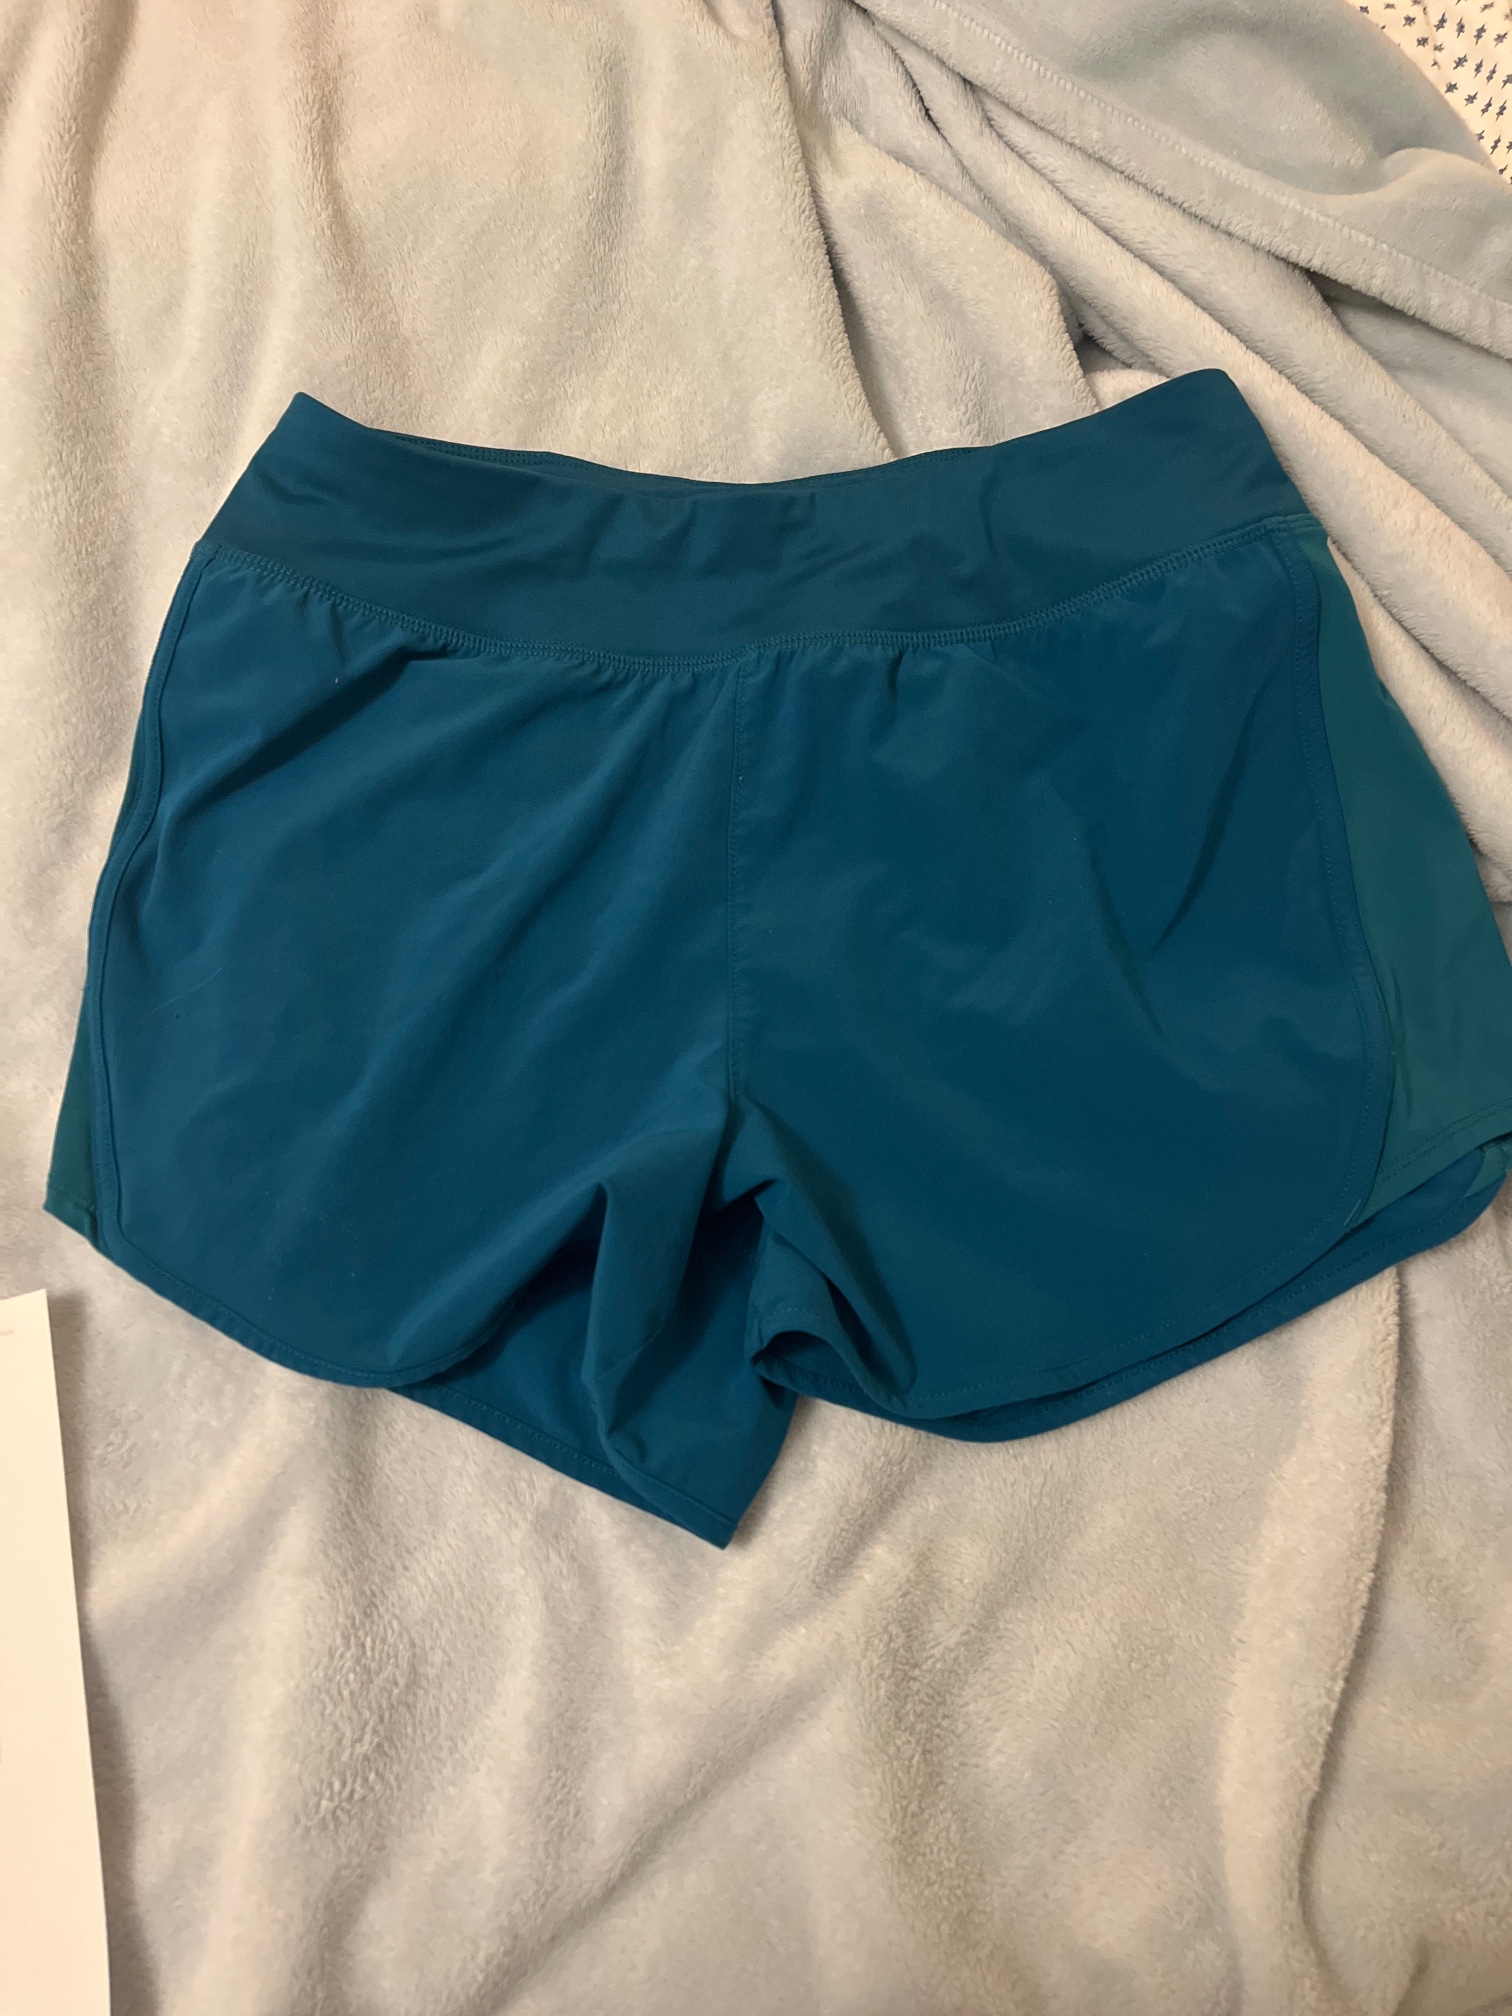 Womens Medium athletic/casual Shorts